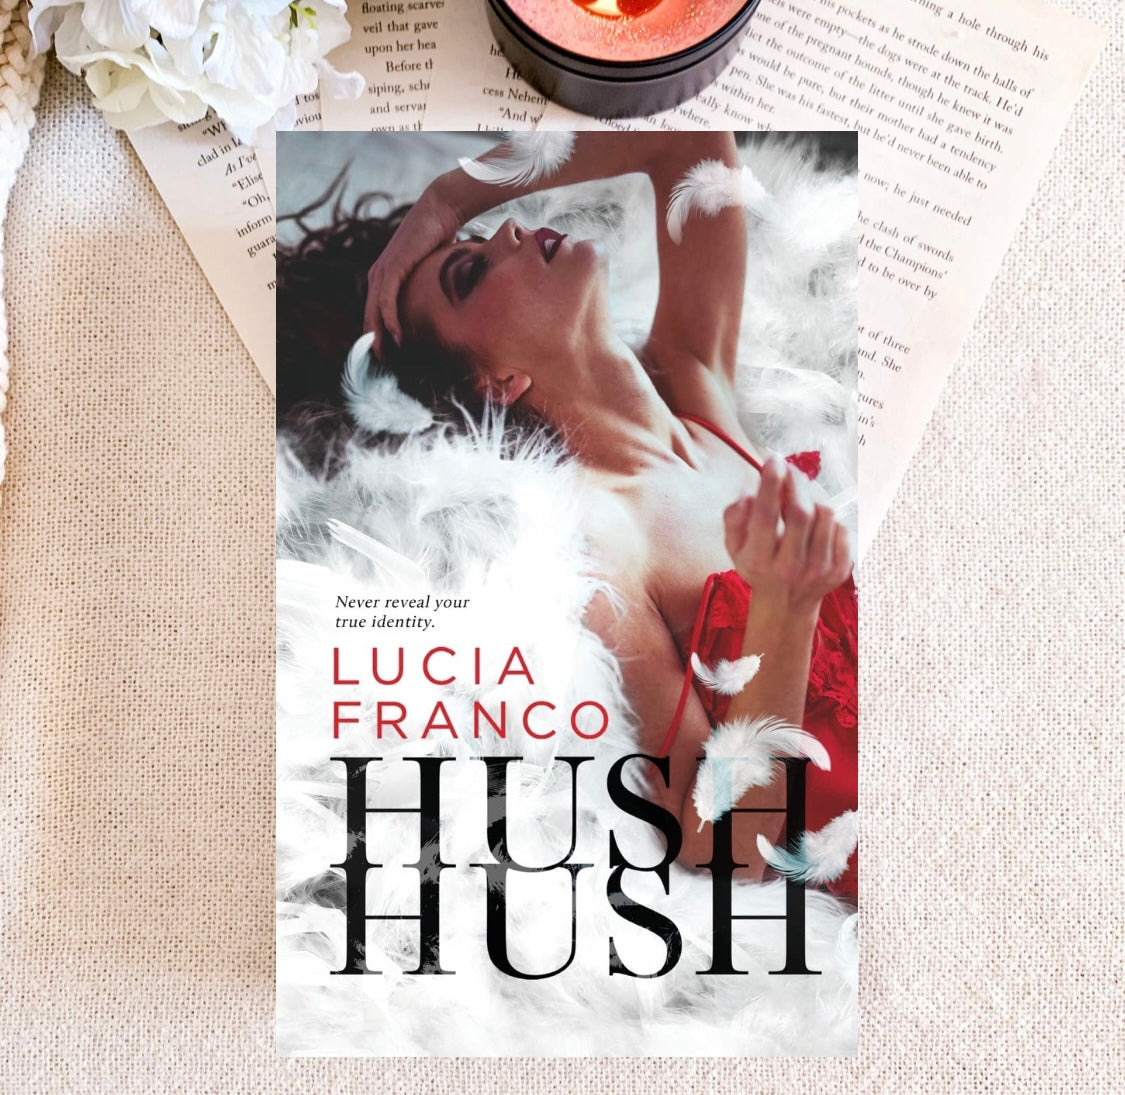 Hush, Hush (hardcover) by Lucia Franco